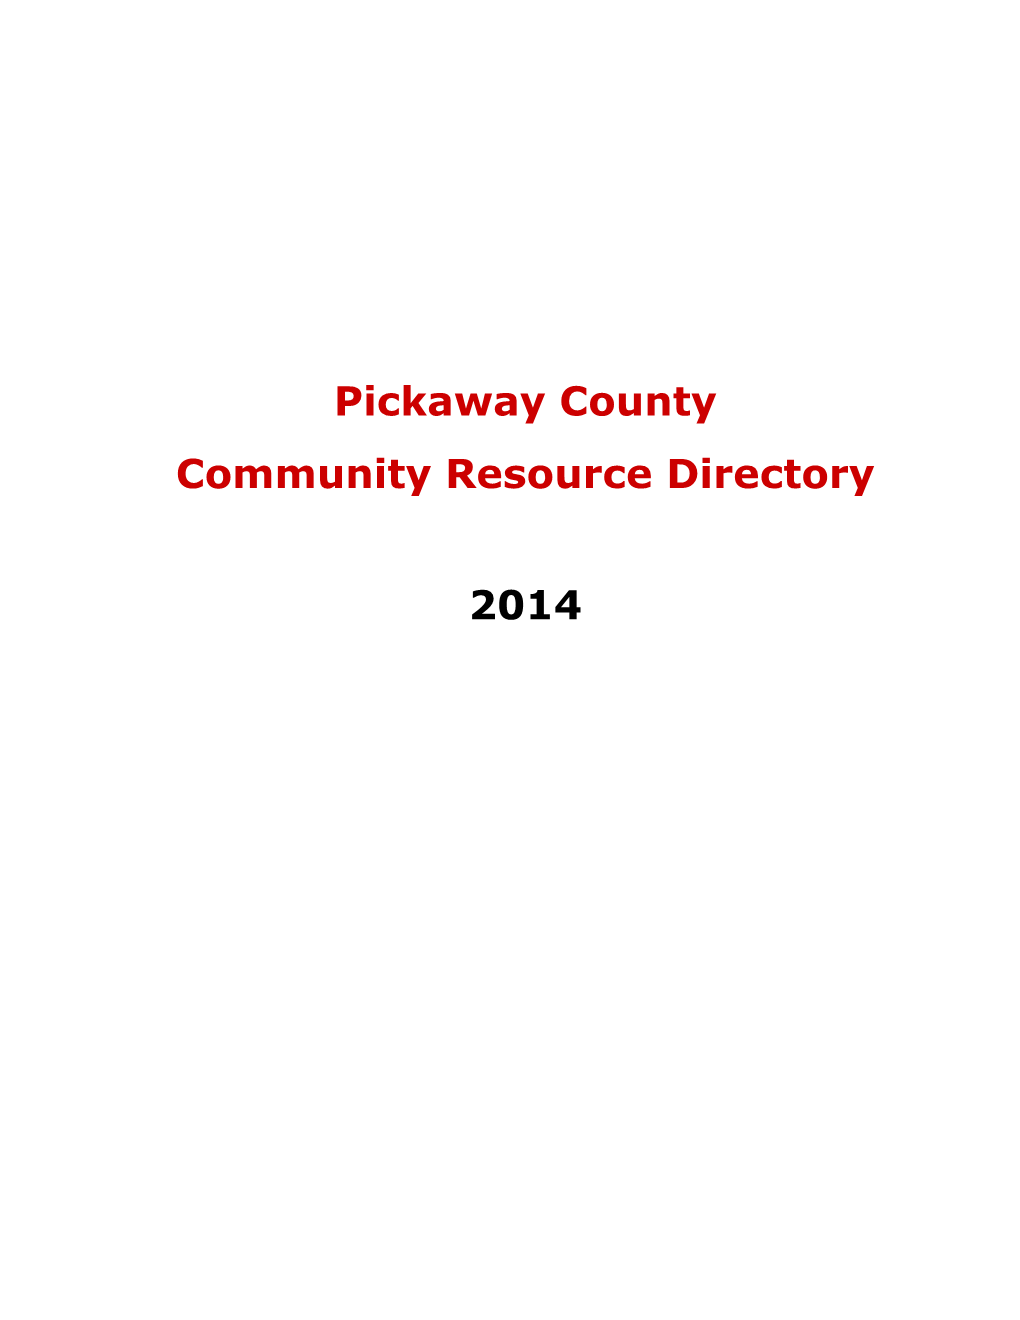 Pickaway County Community Resource Directory 2014